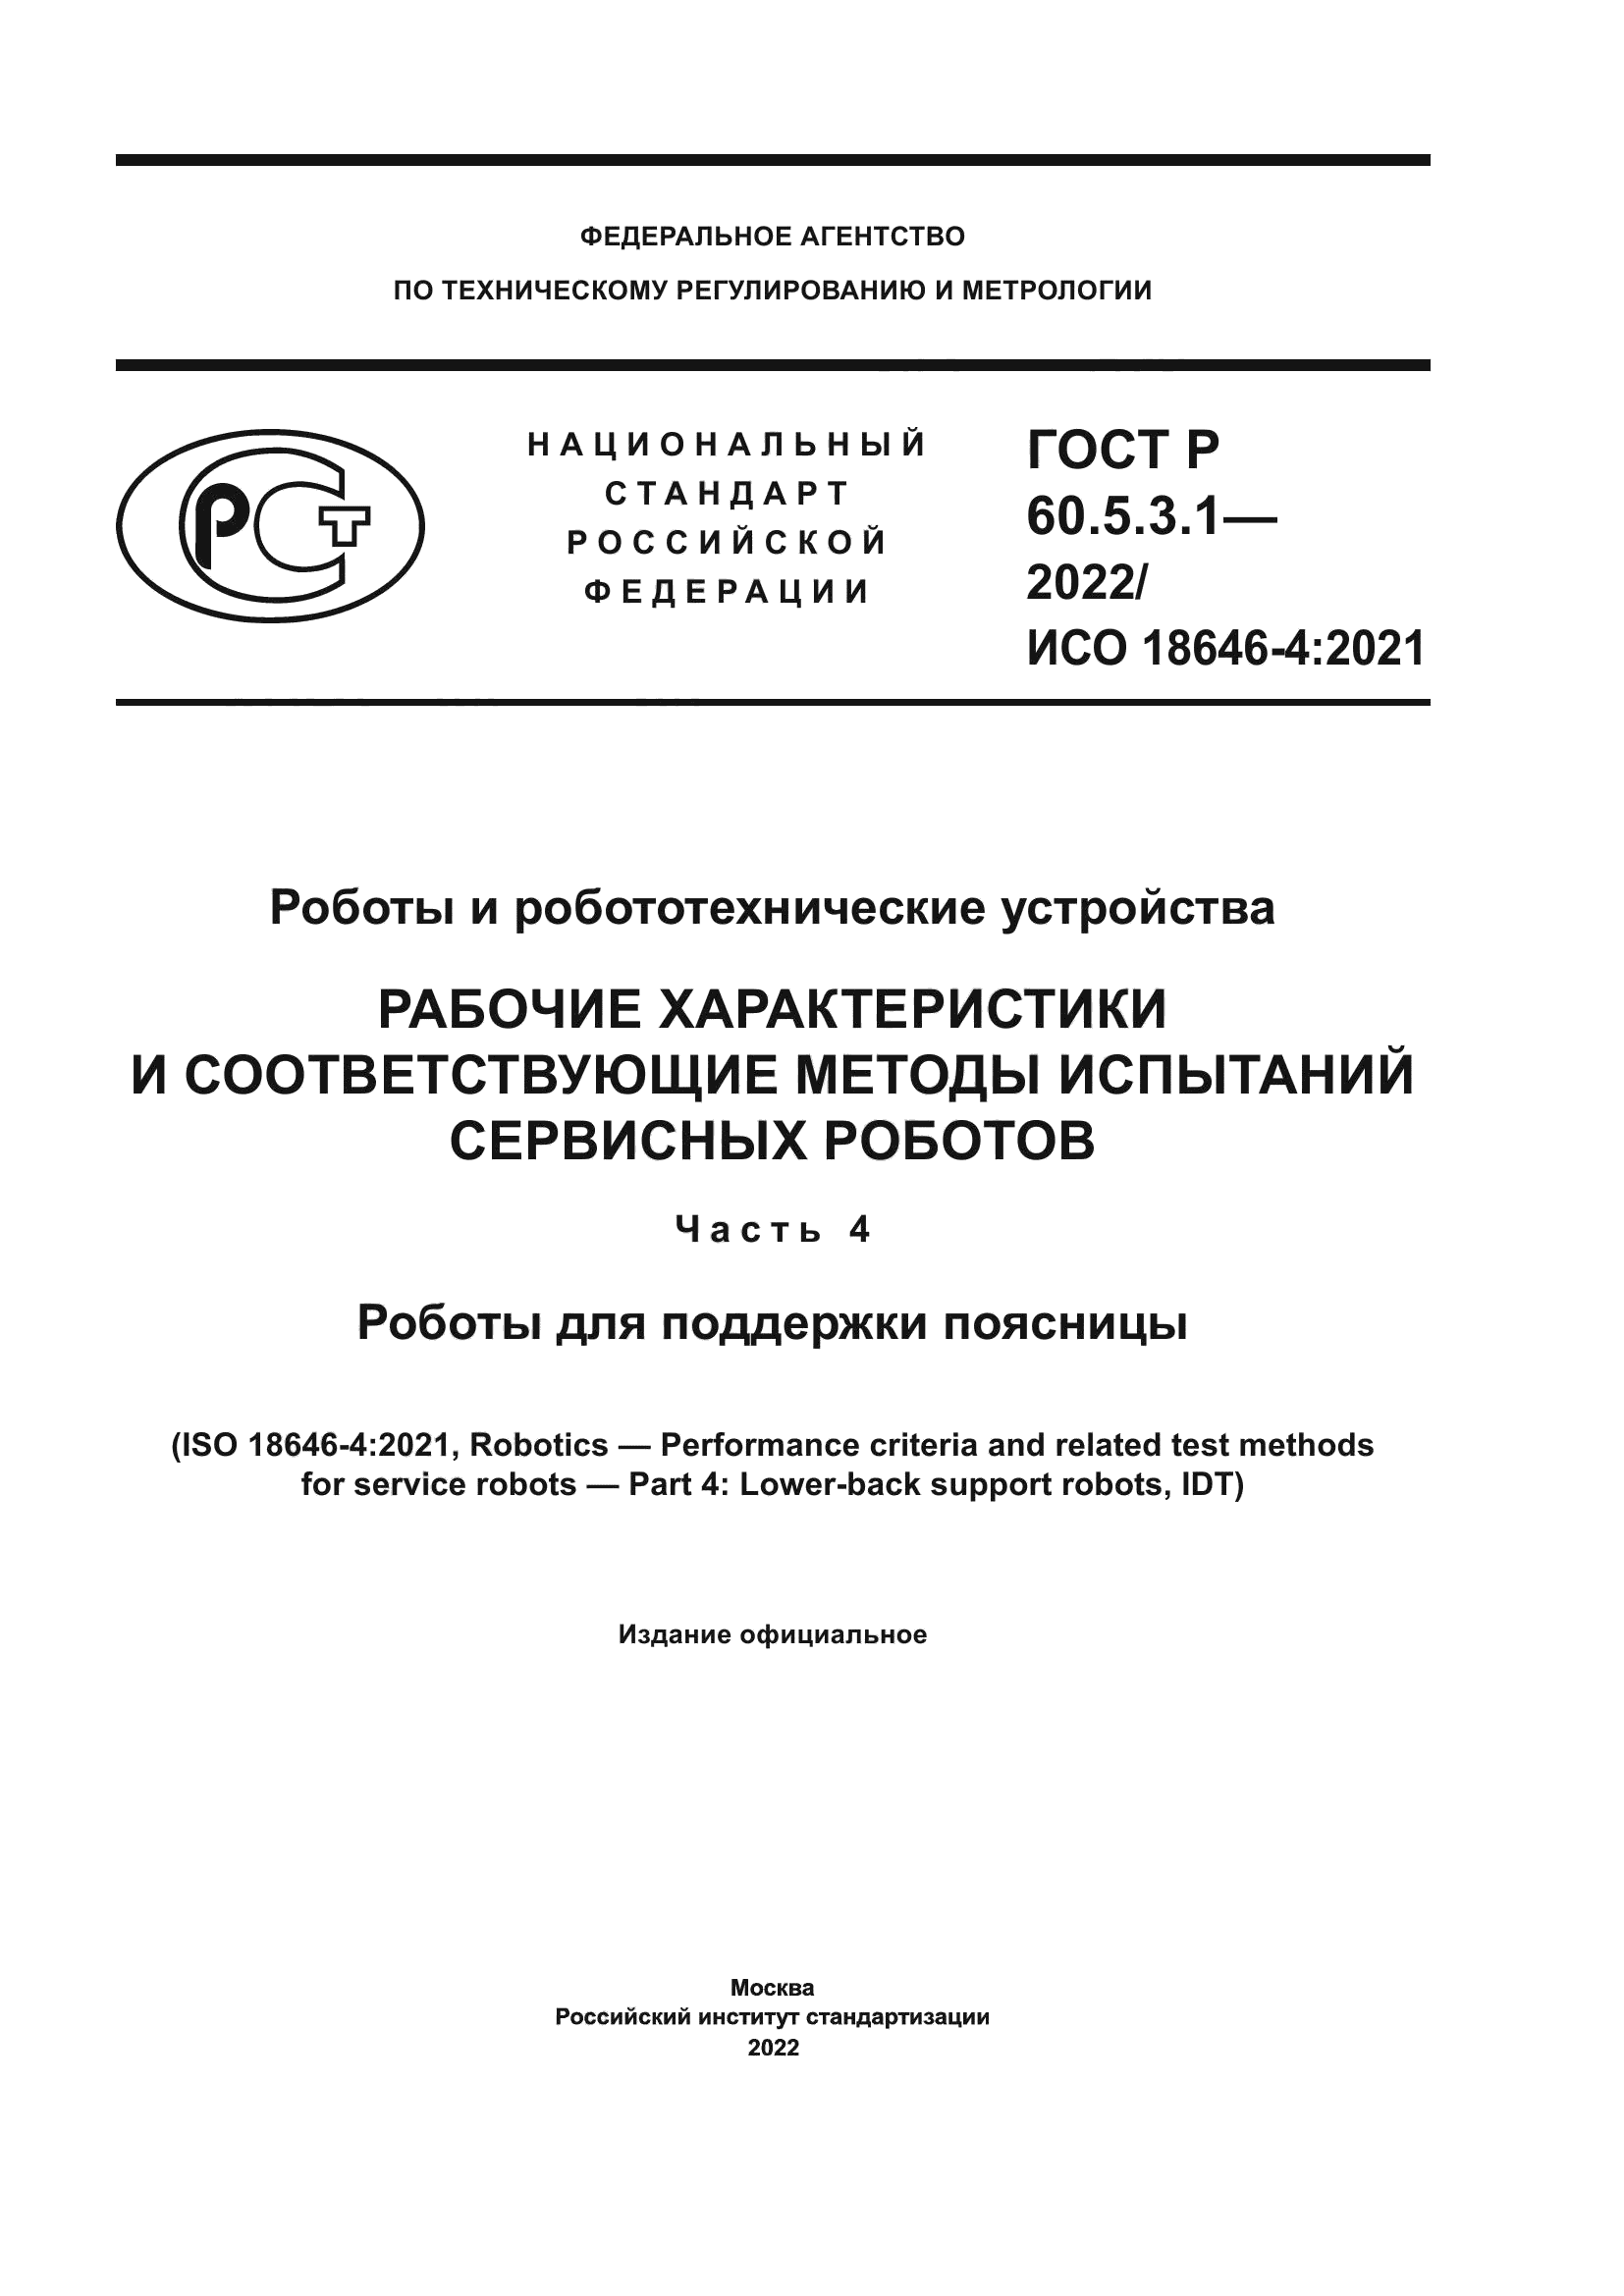 ГОСТ Р 60.5.3.1-2022